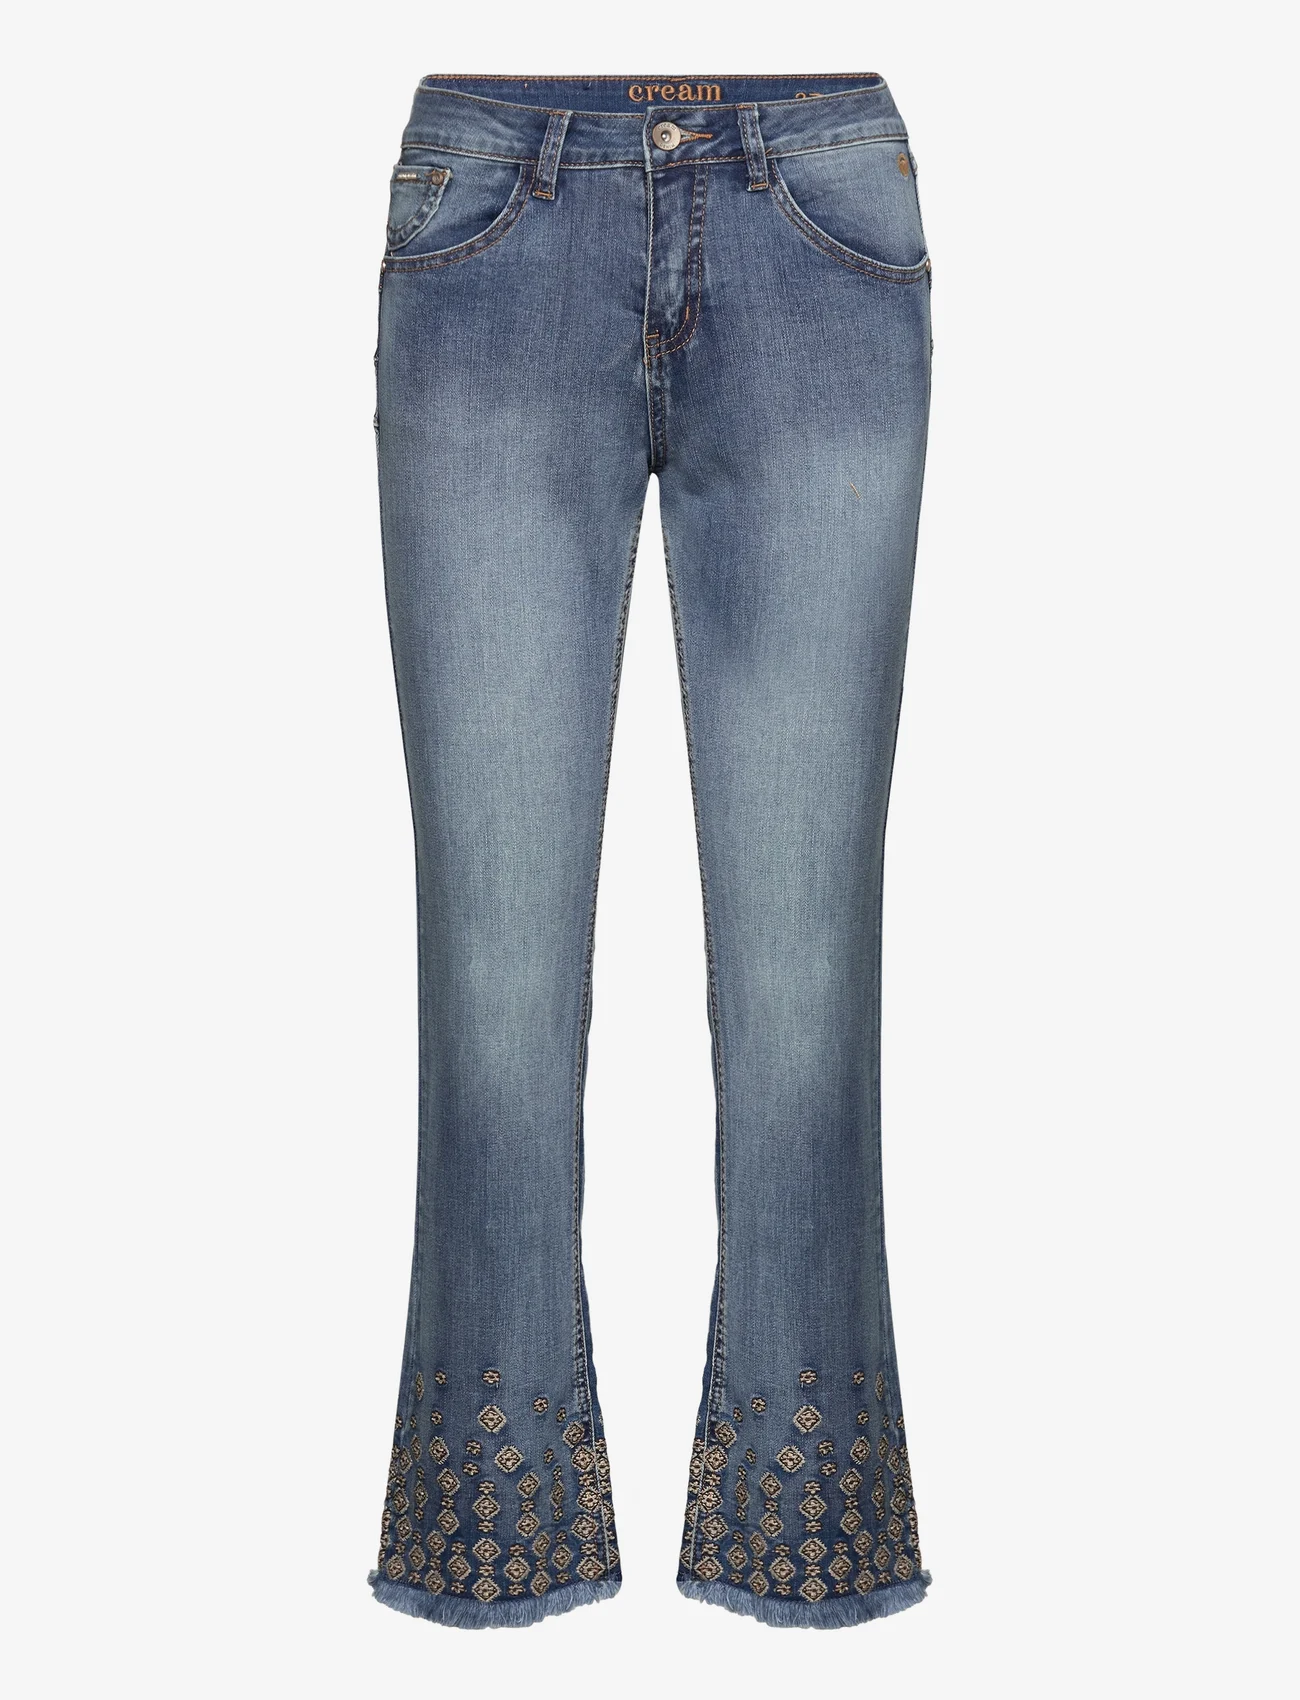 Cream - CRRysha 7/8 Jeans - Shape Fit - flared jeans - denim blue - 0